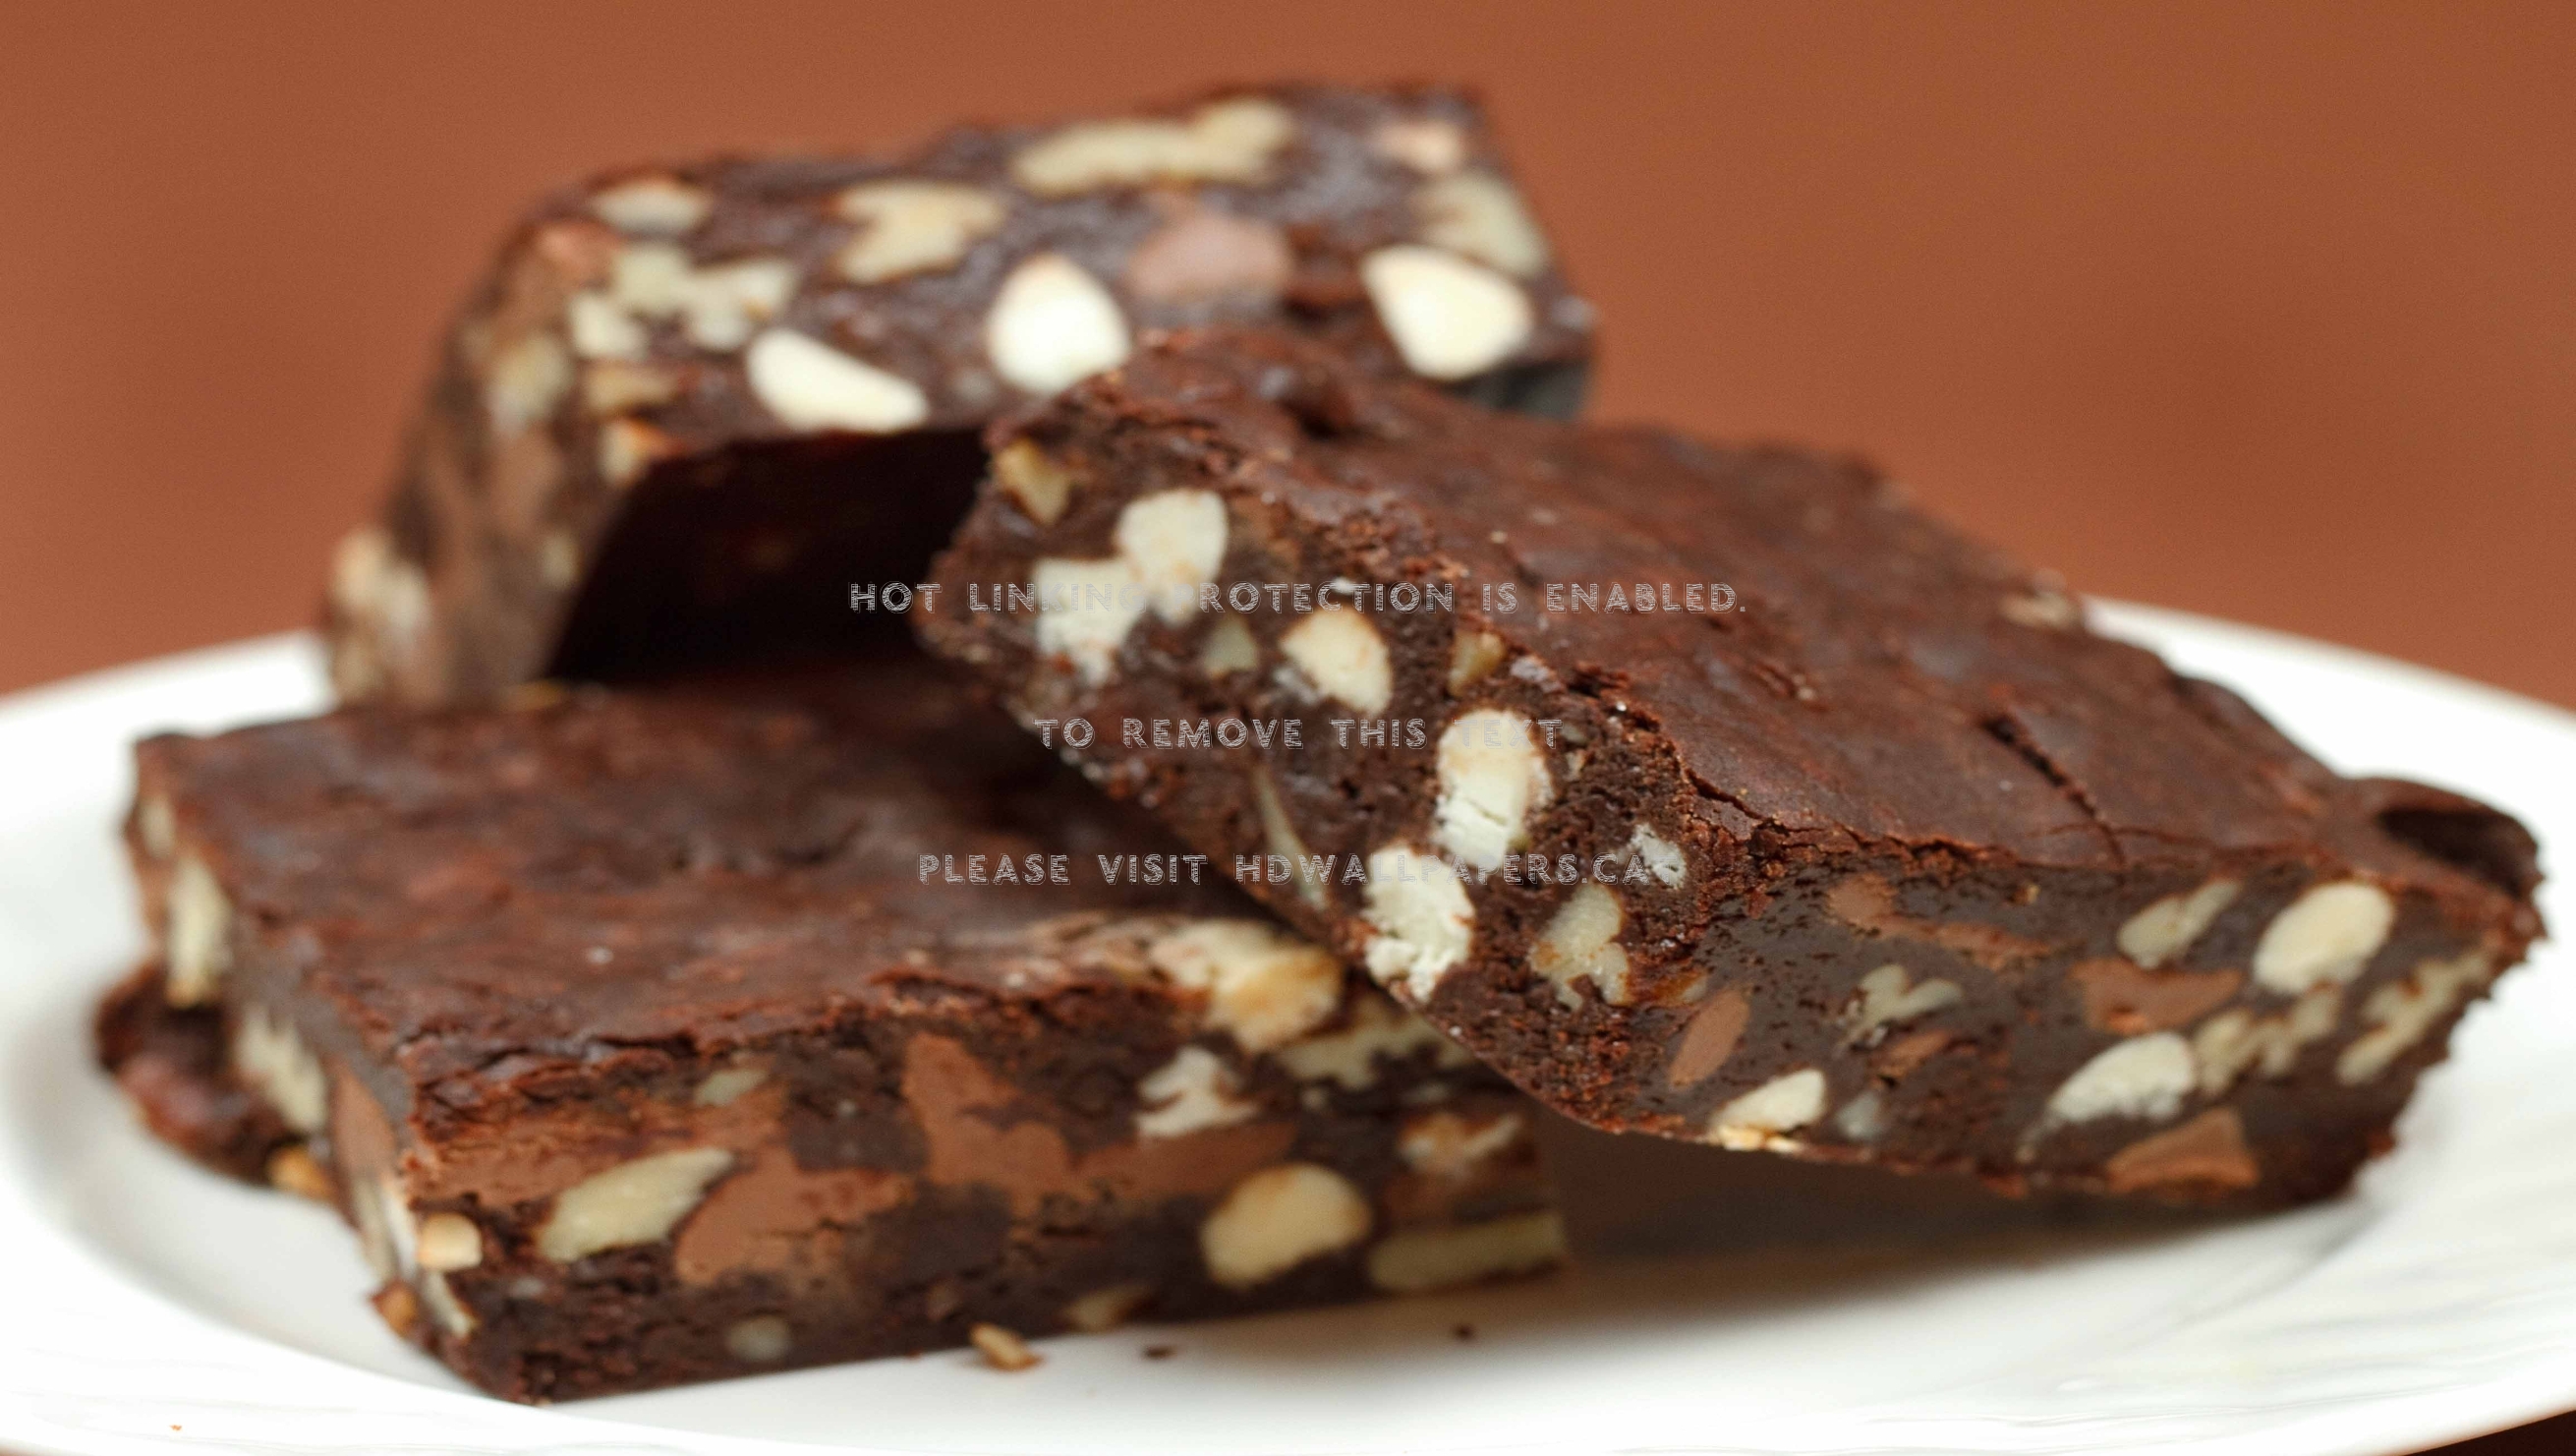 Triple Chocolate Fudge Brownies With Bakery Hd Wallpaper - Chocolate Brownie Fudge - HD Wallpaper 